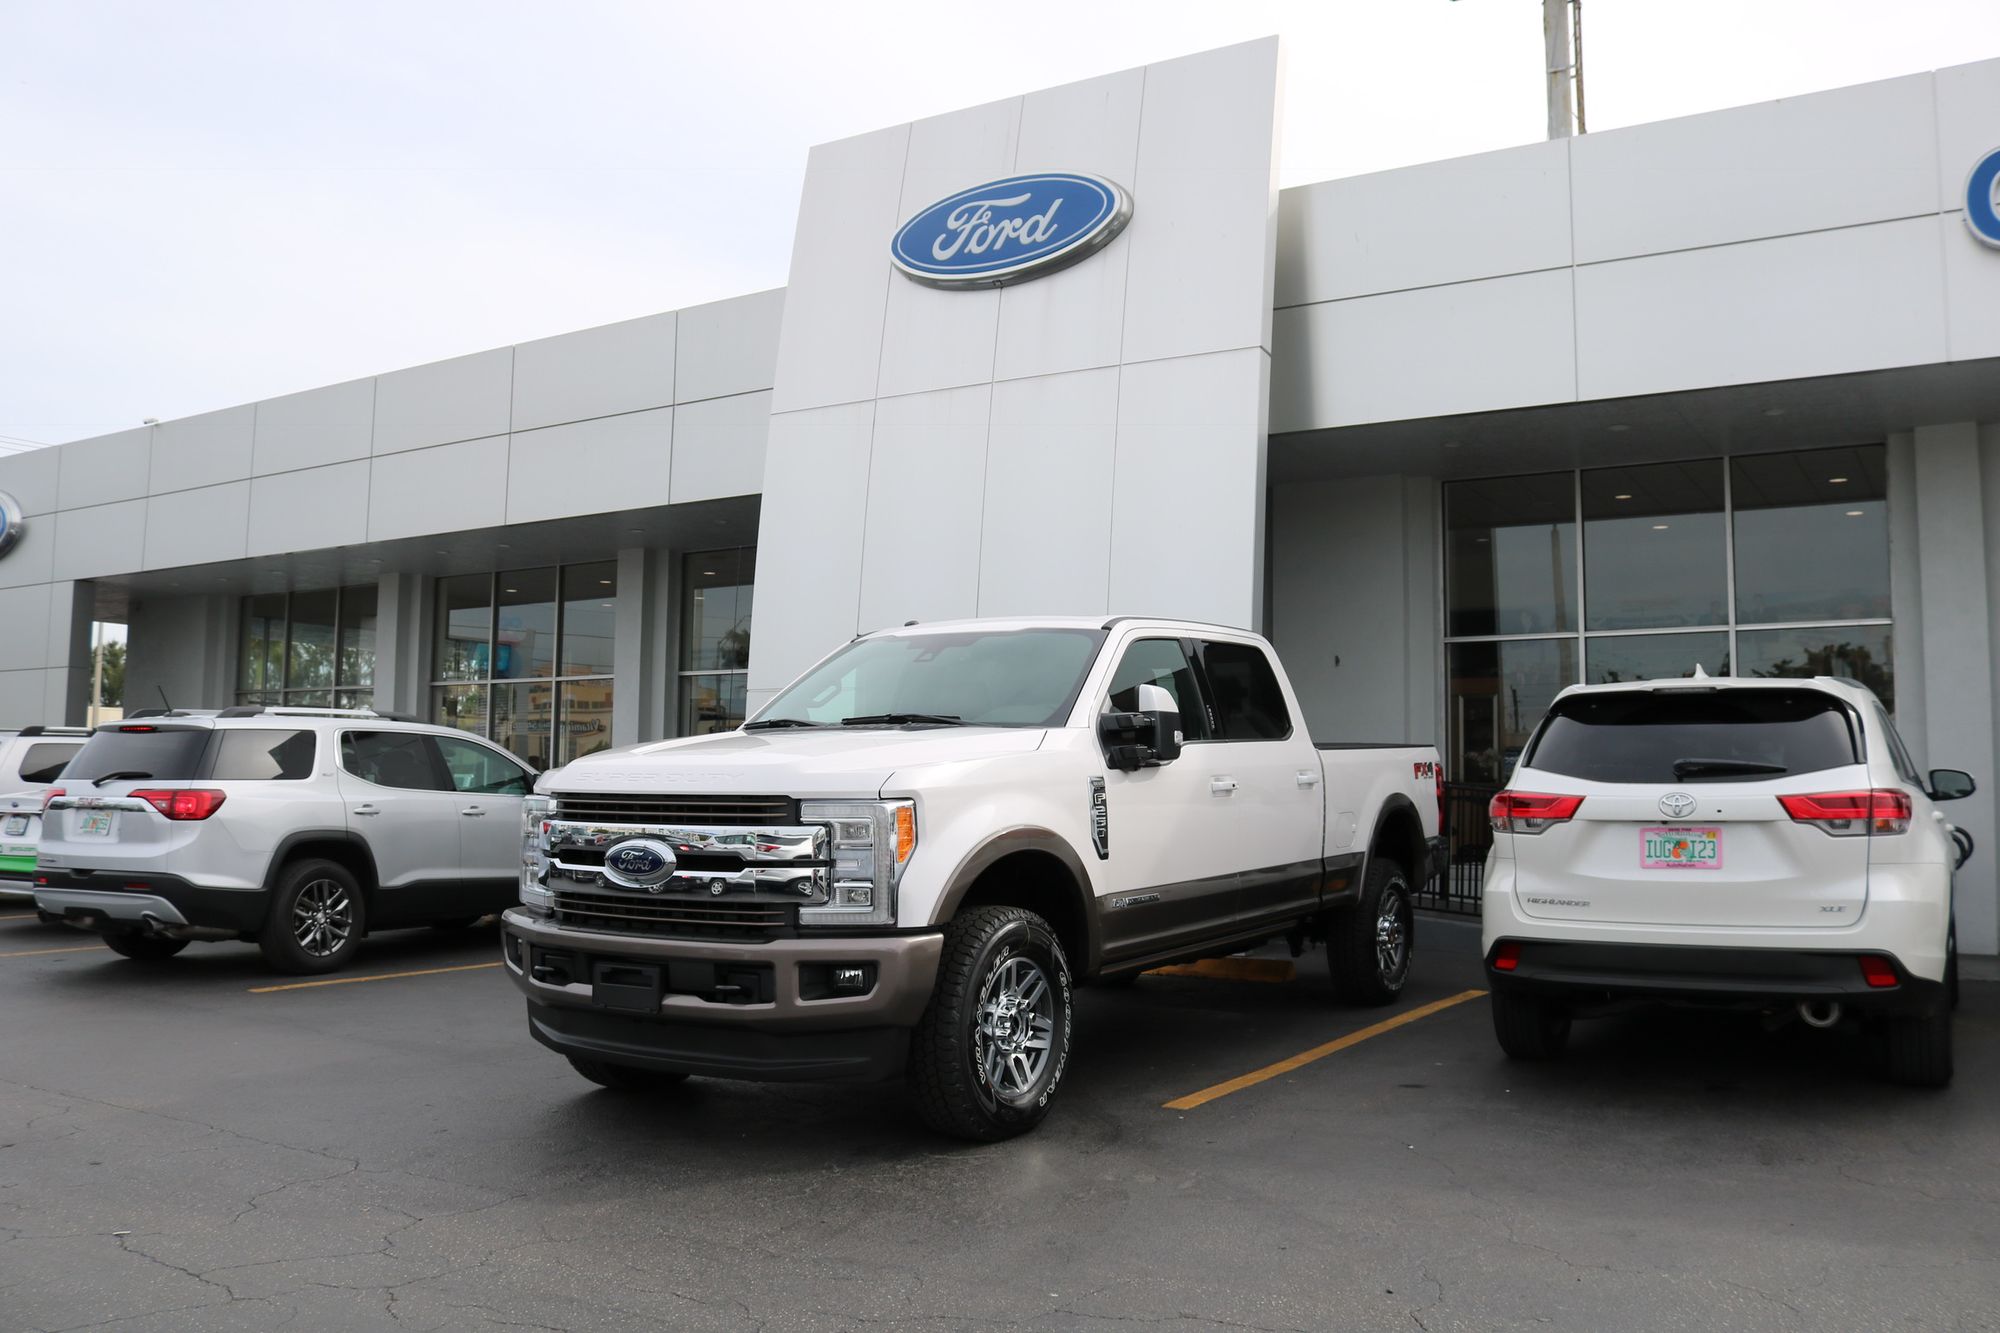 Ford Truck Dealership